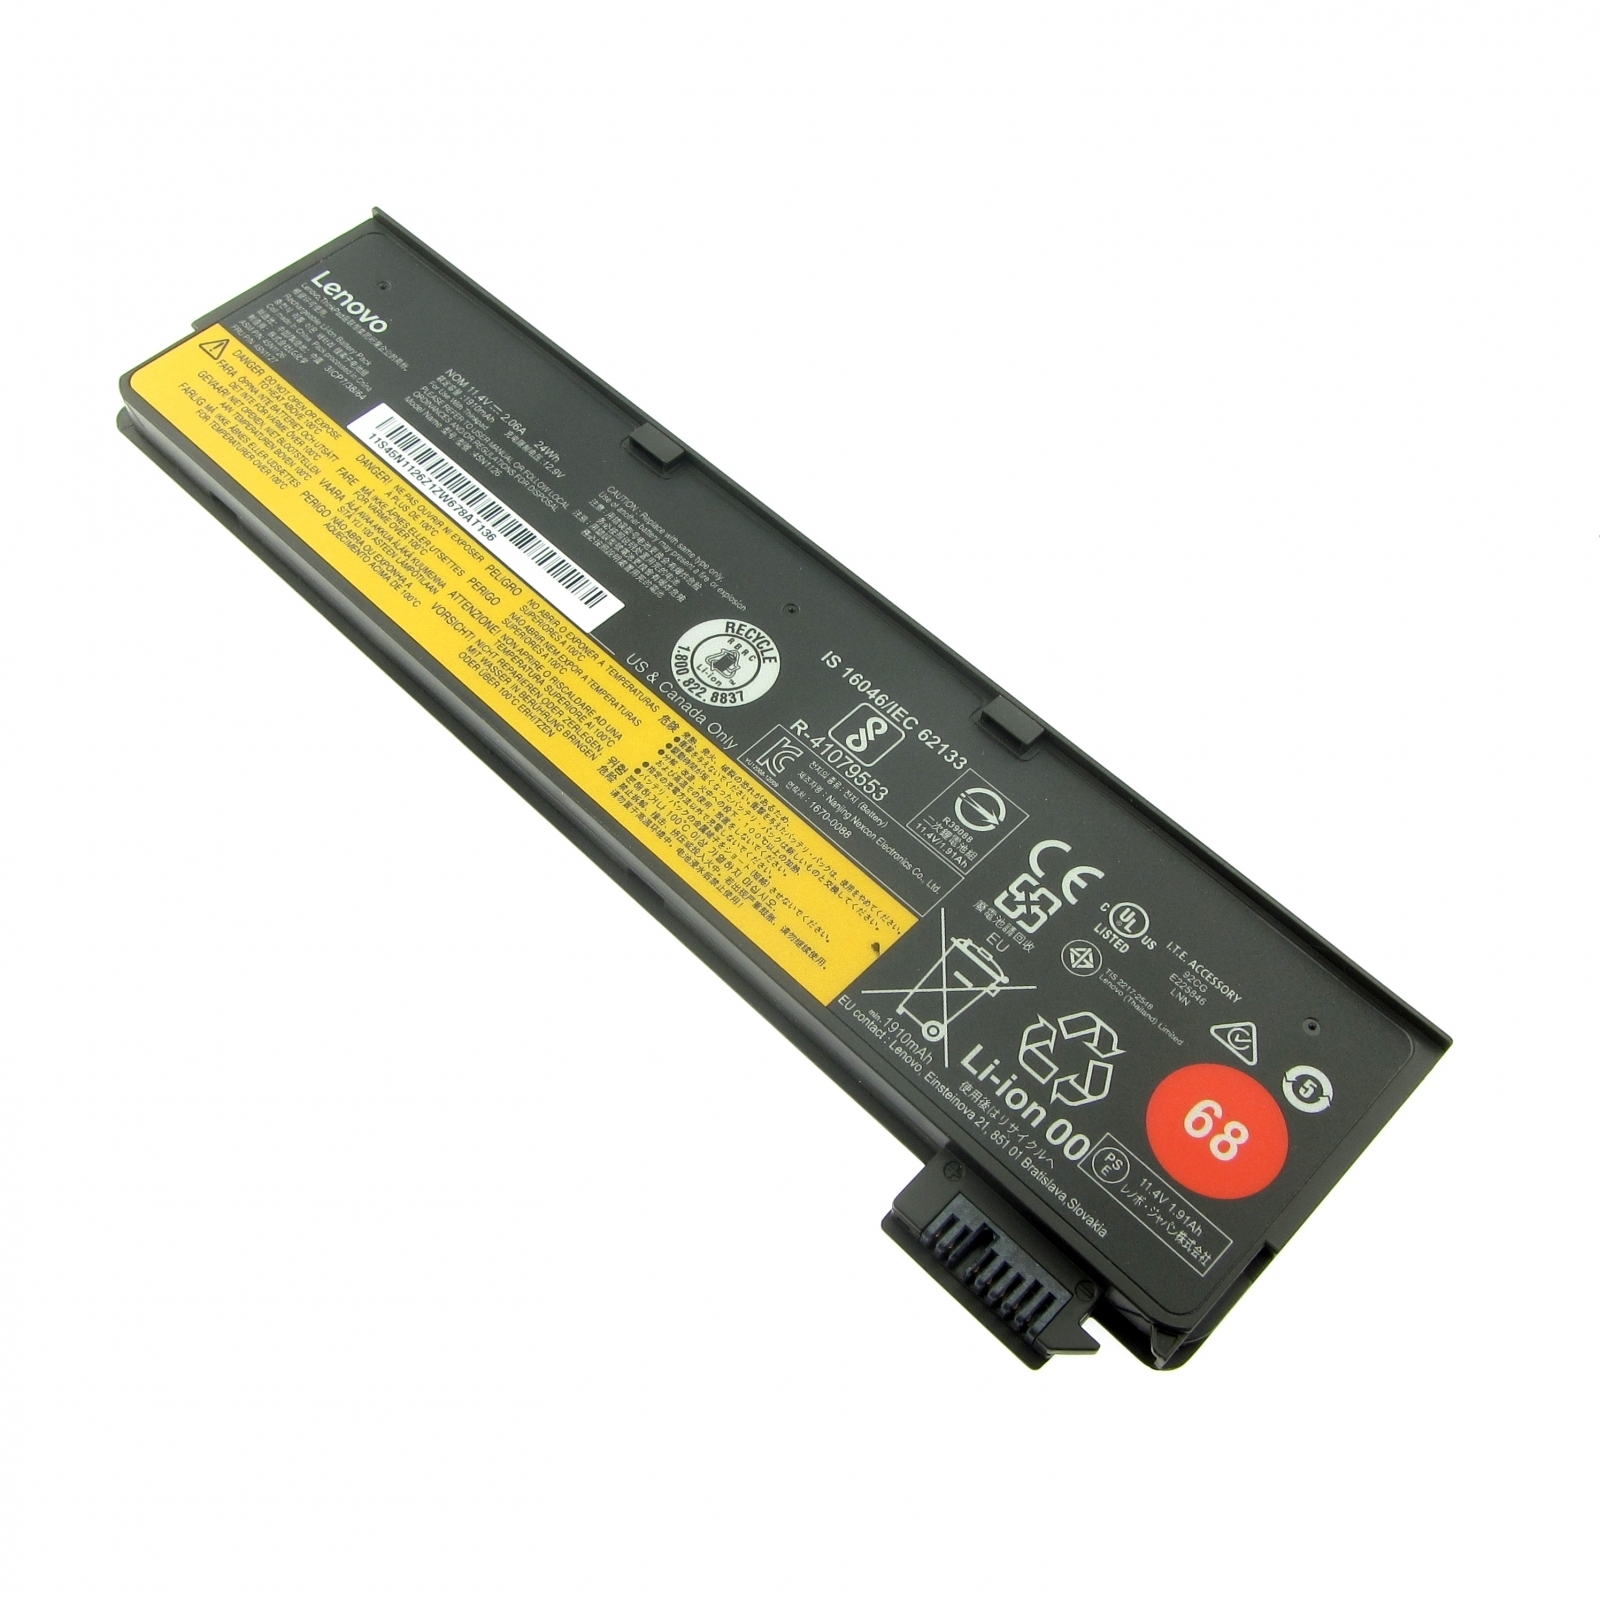 LENOVO original Akku Battery 68 2090 ThinkPad Lithium-Ionen LiIon, 11.4V, mAh (20AJ) 2090mAh LENOVO X240s Notebook-Akku, für 11.4 Volt, (LiIon)